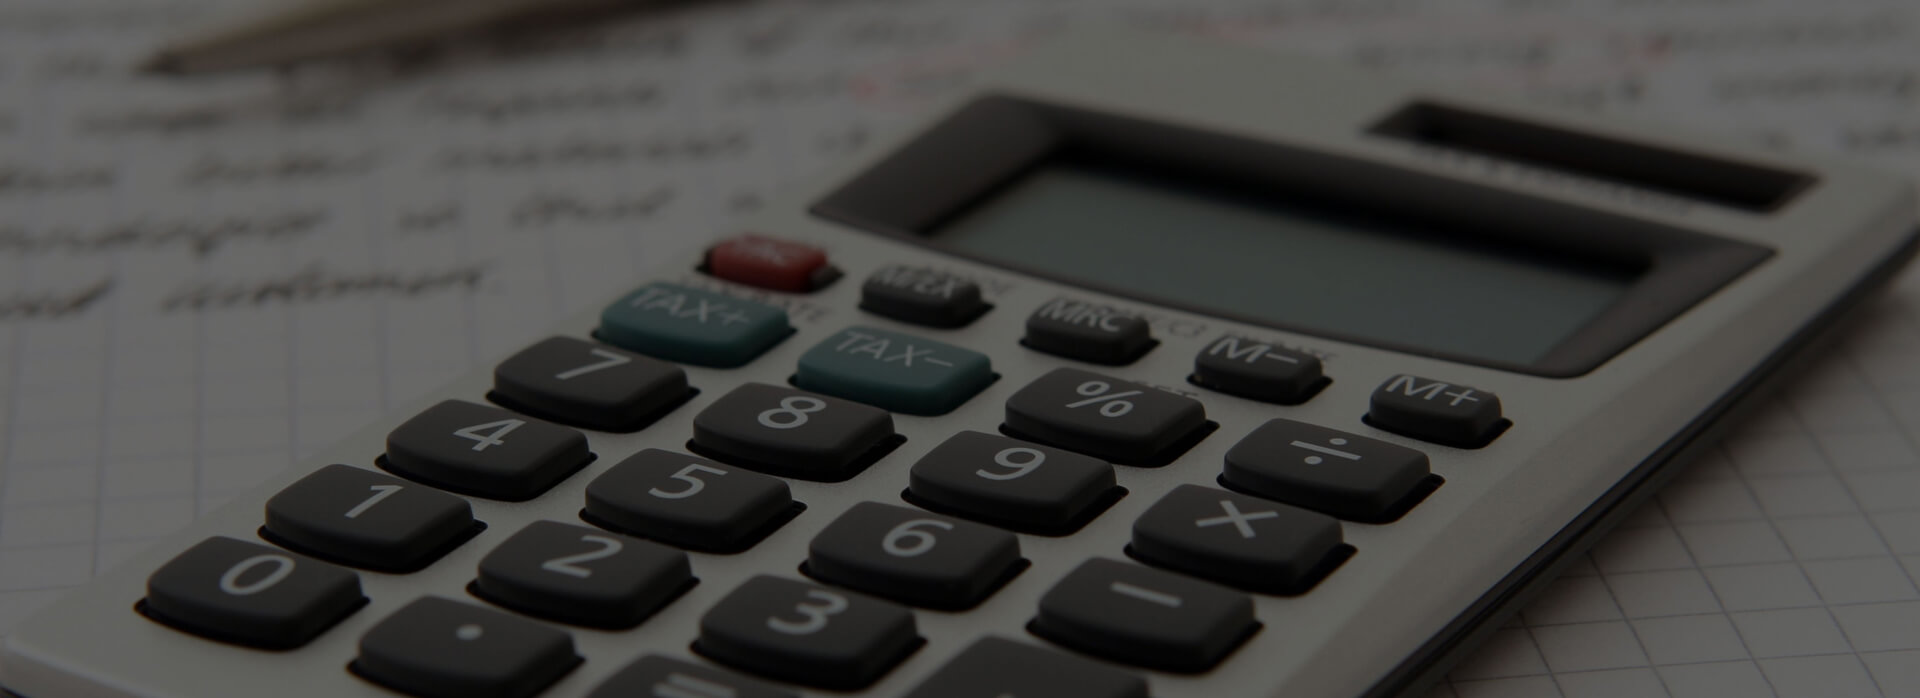 Spain Tax Refund Calculator